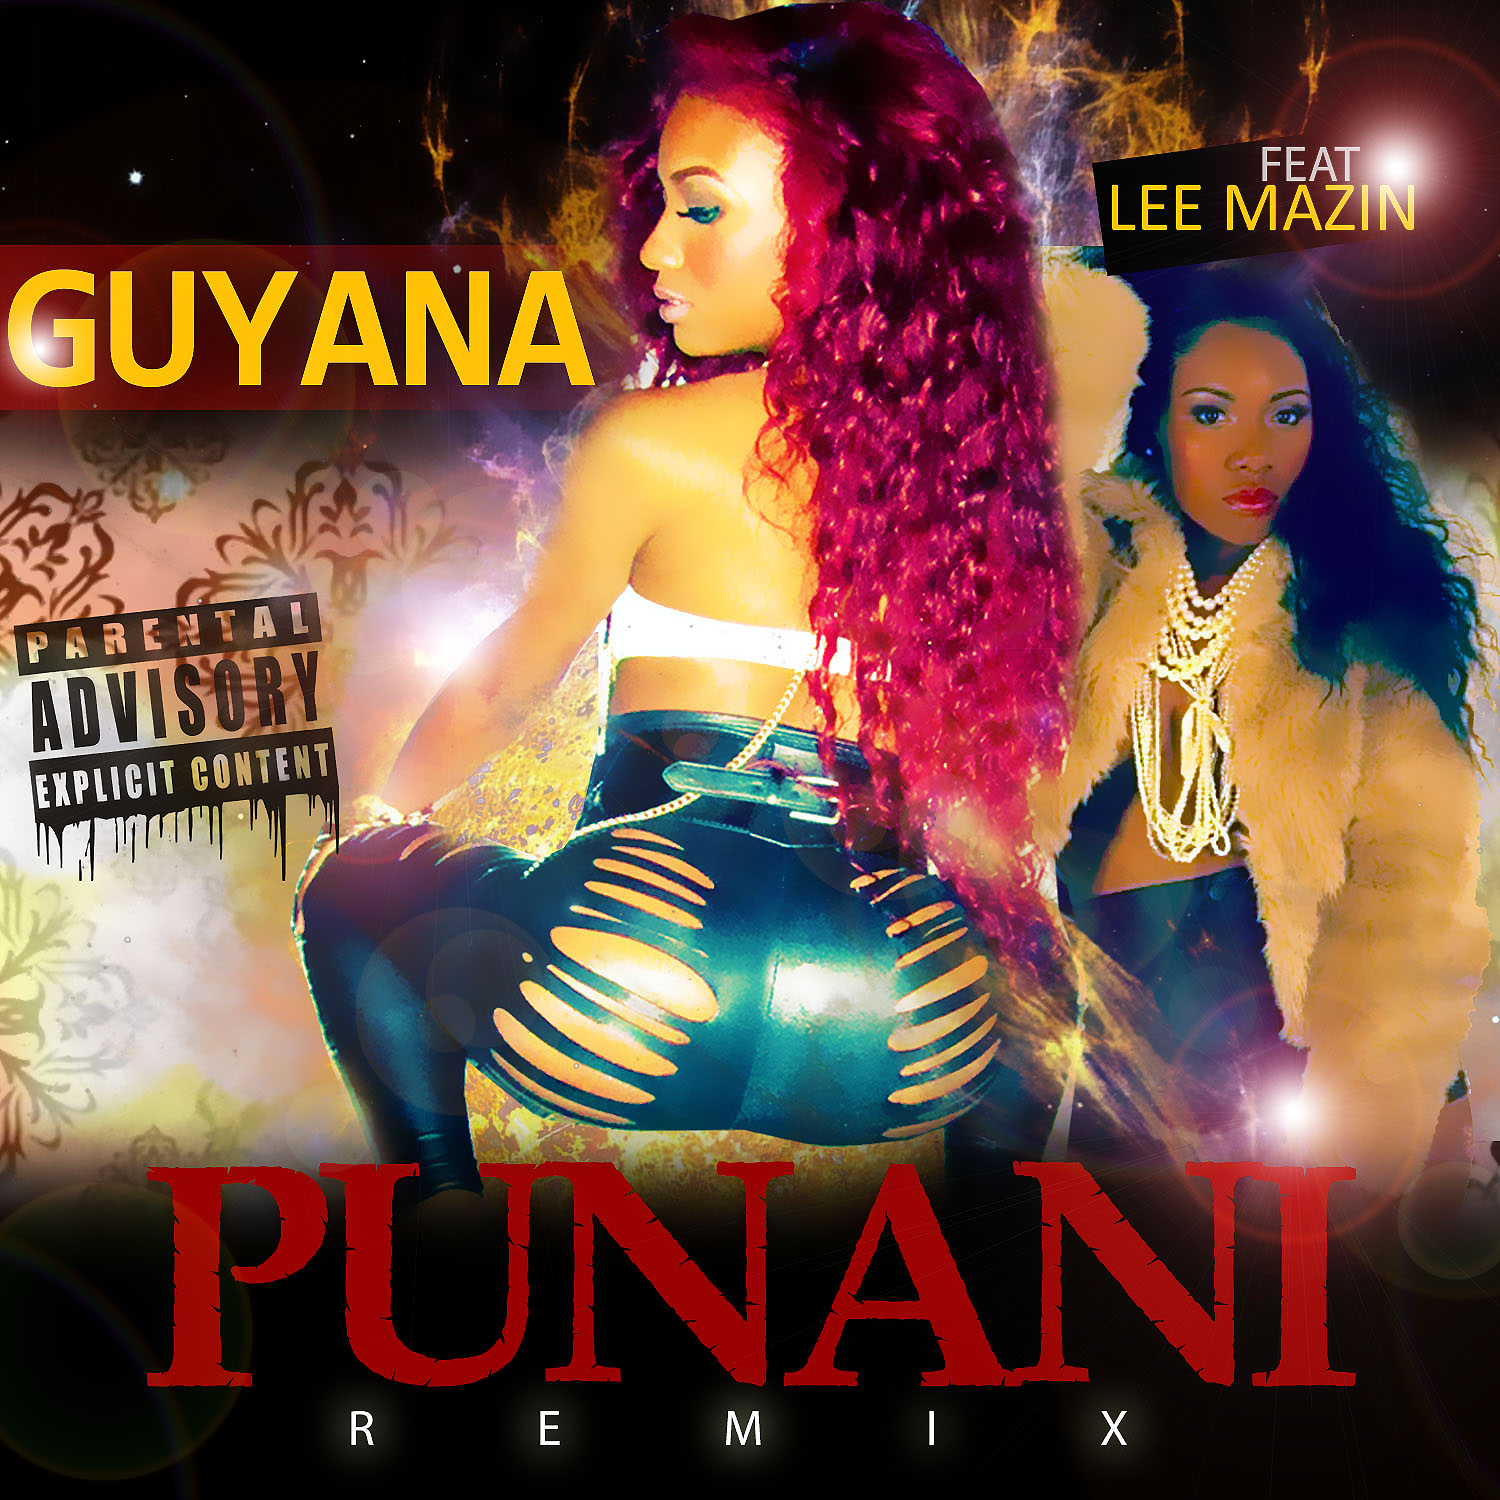 guyana-lee-mazin-punani-remix-HHS1987-2013 Guyana x Lee Mazin - Punani (Remix) 